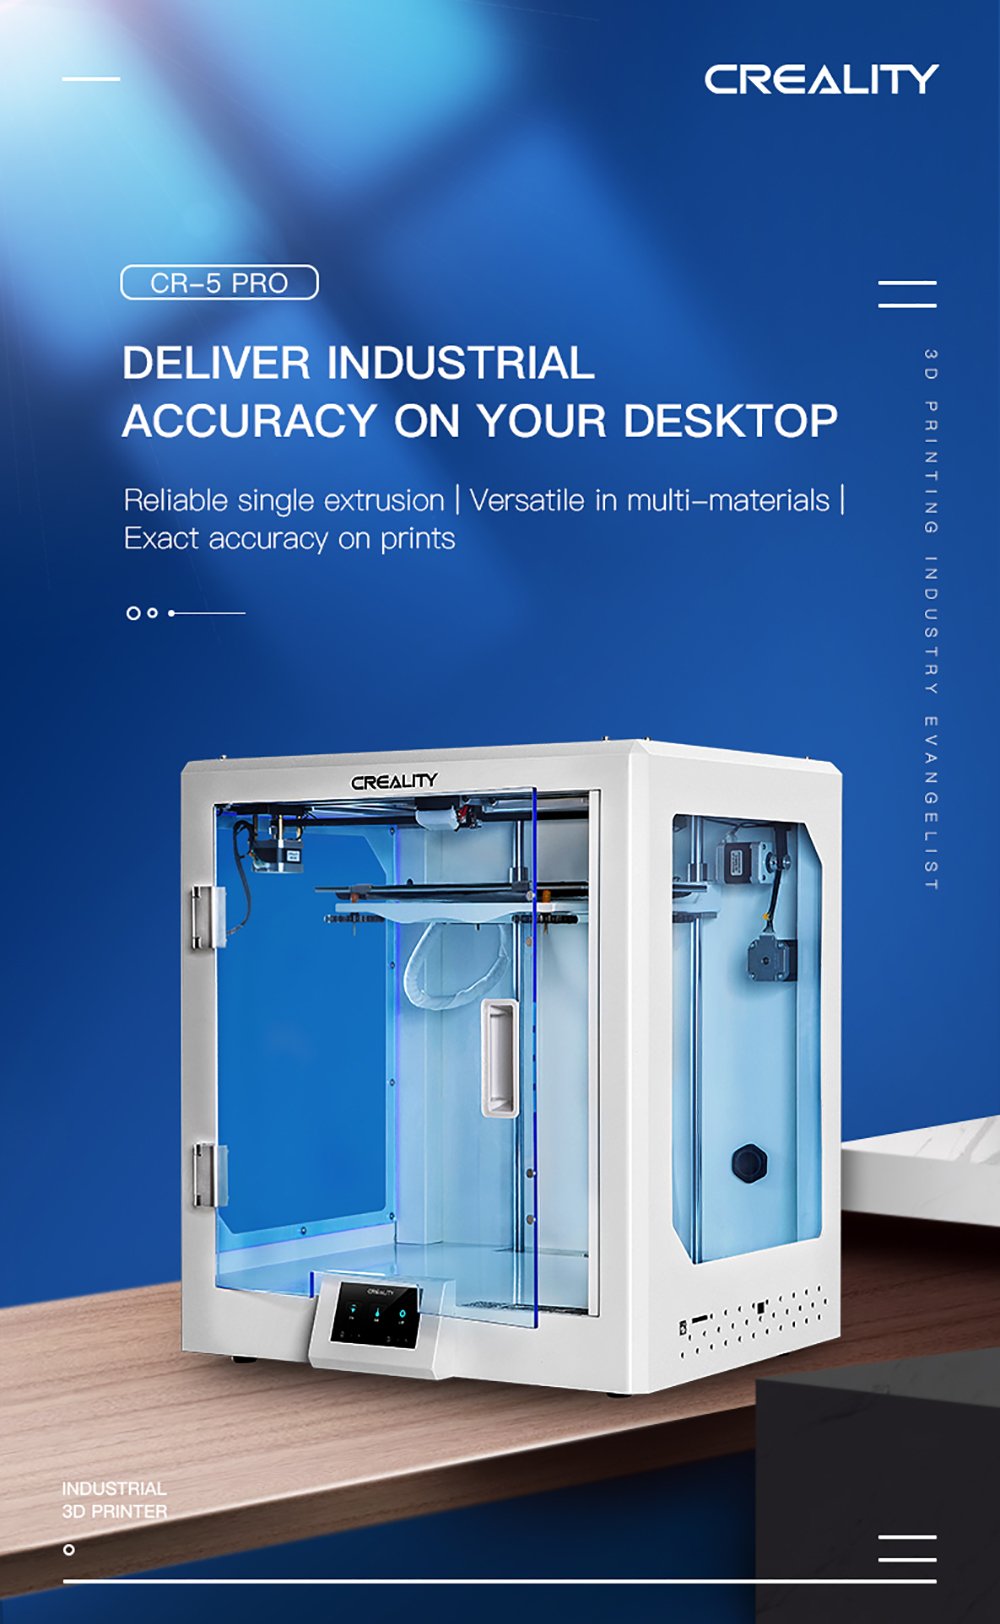 Creality CR-5 pro 3D printer